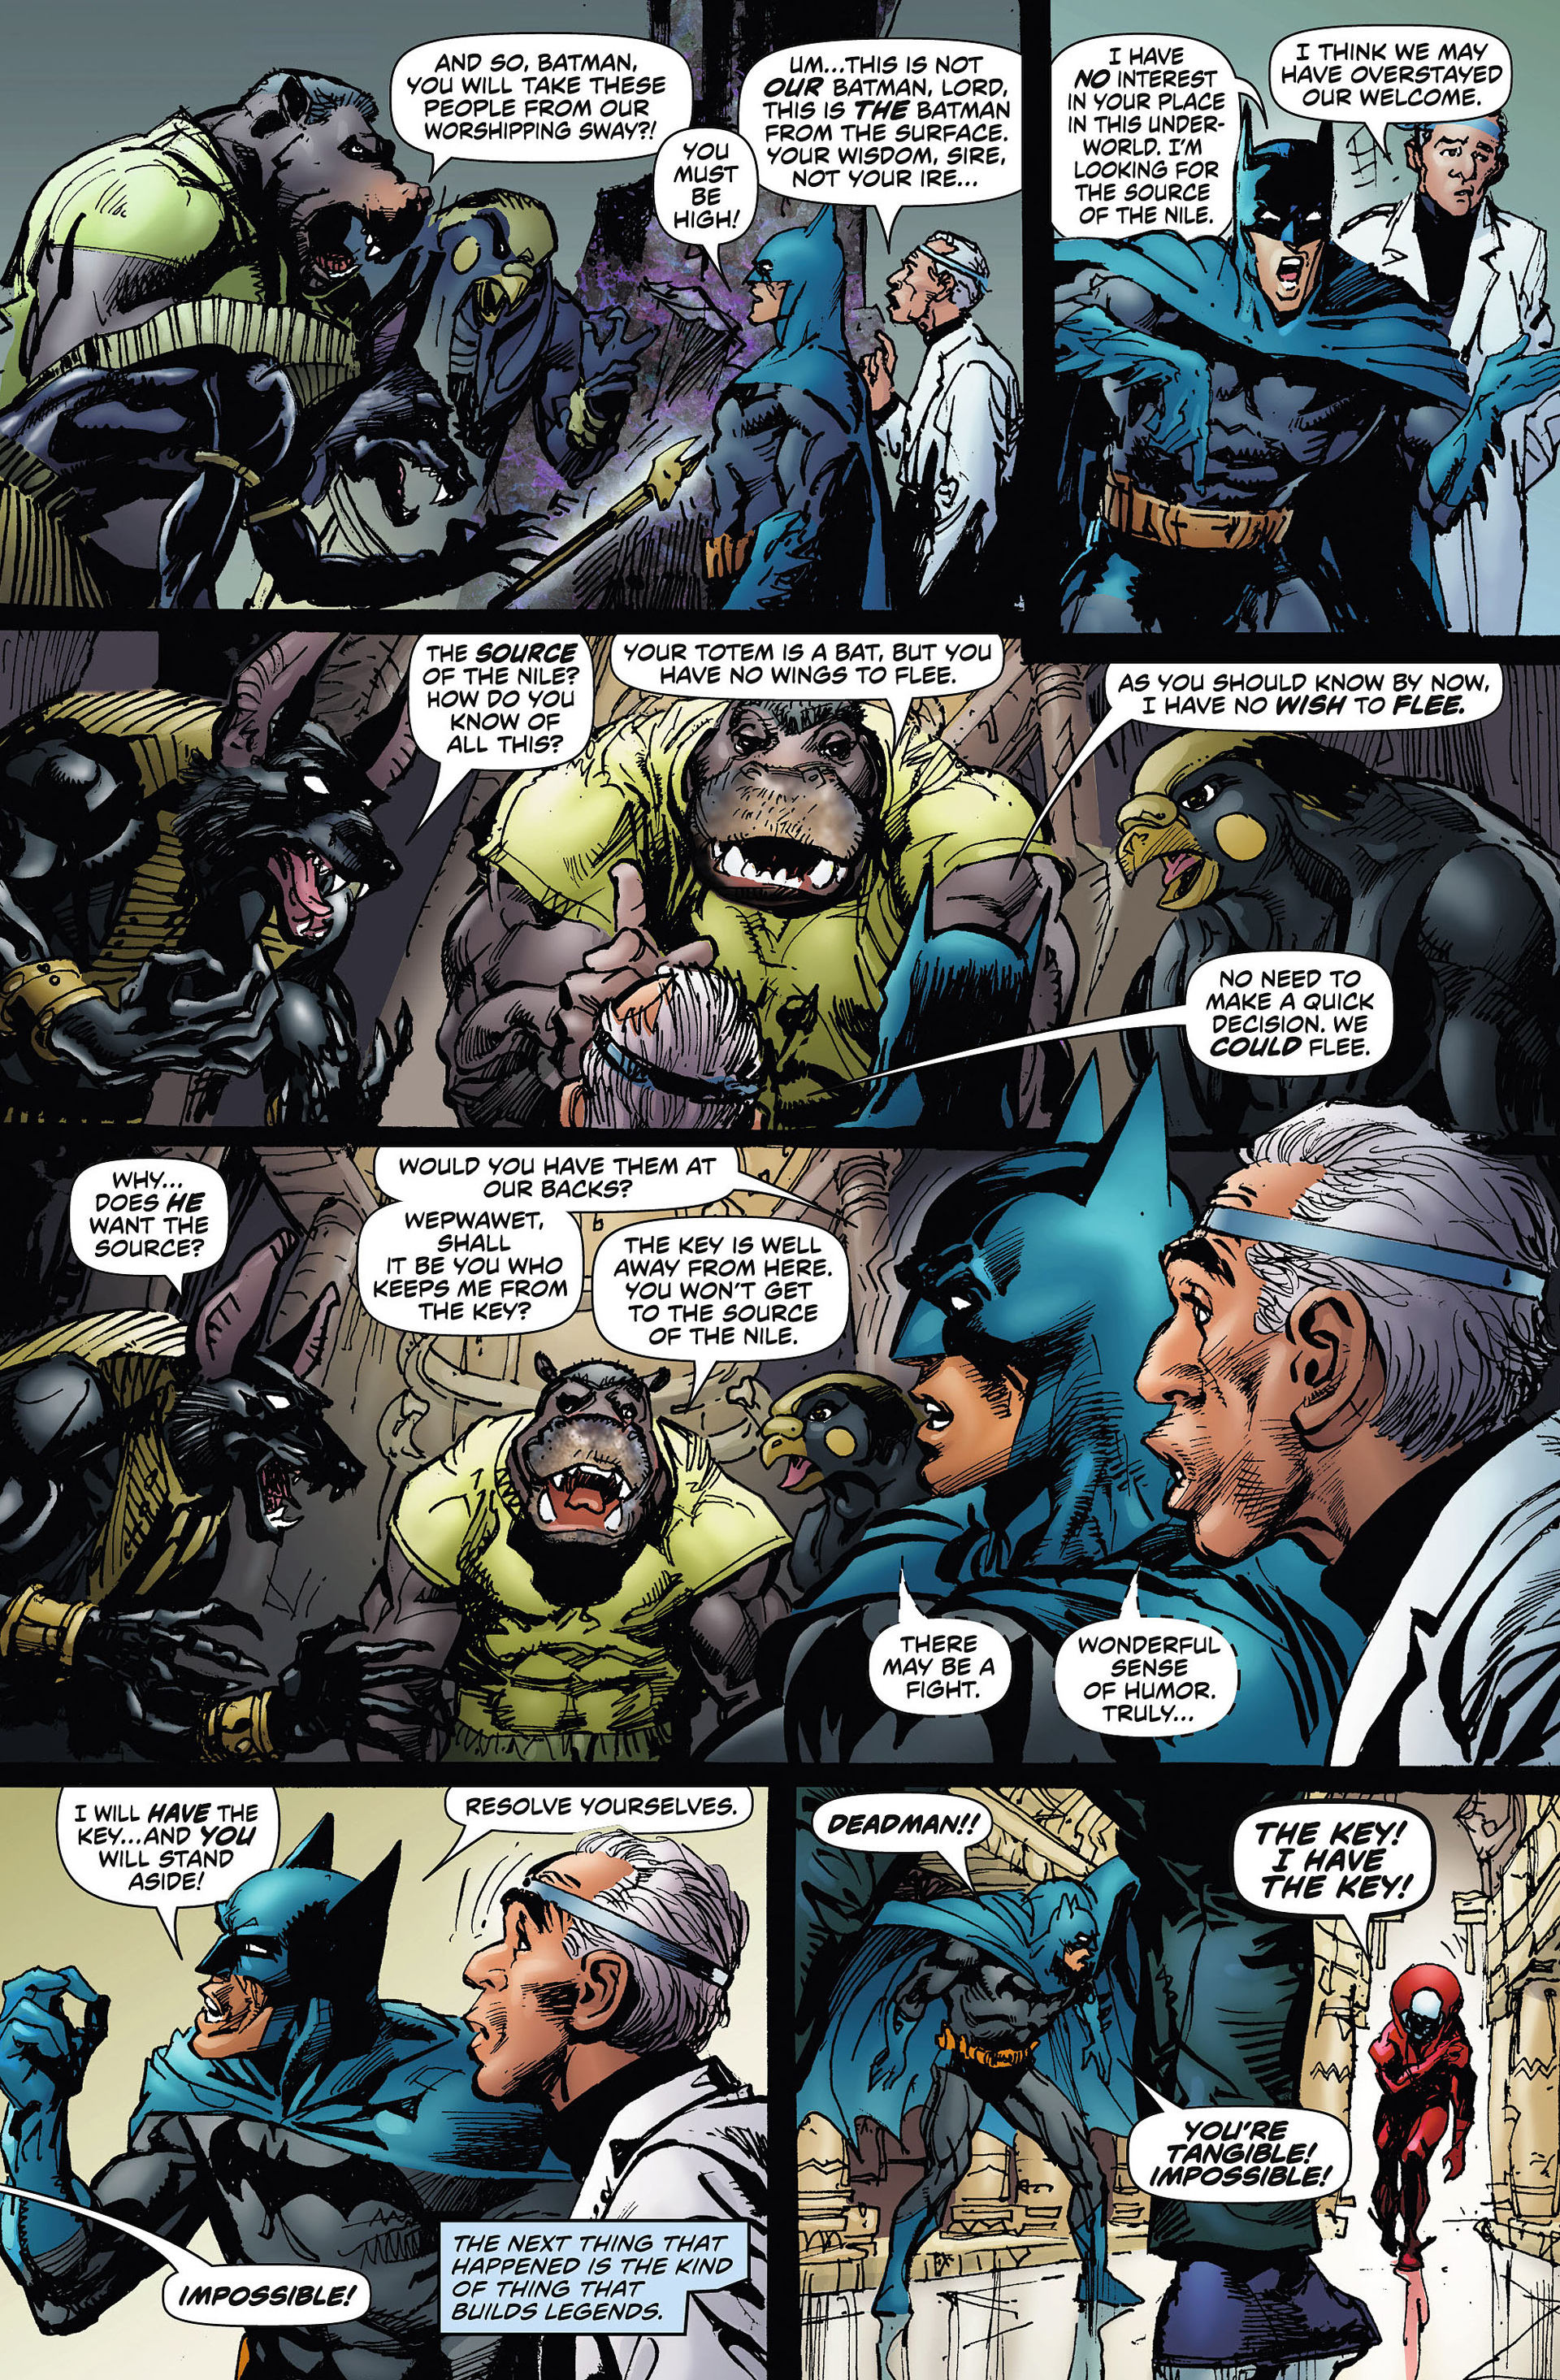 Read Online Batman Odyssey Comic Issue 4